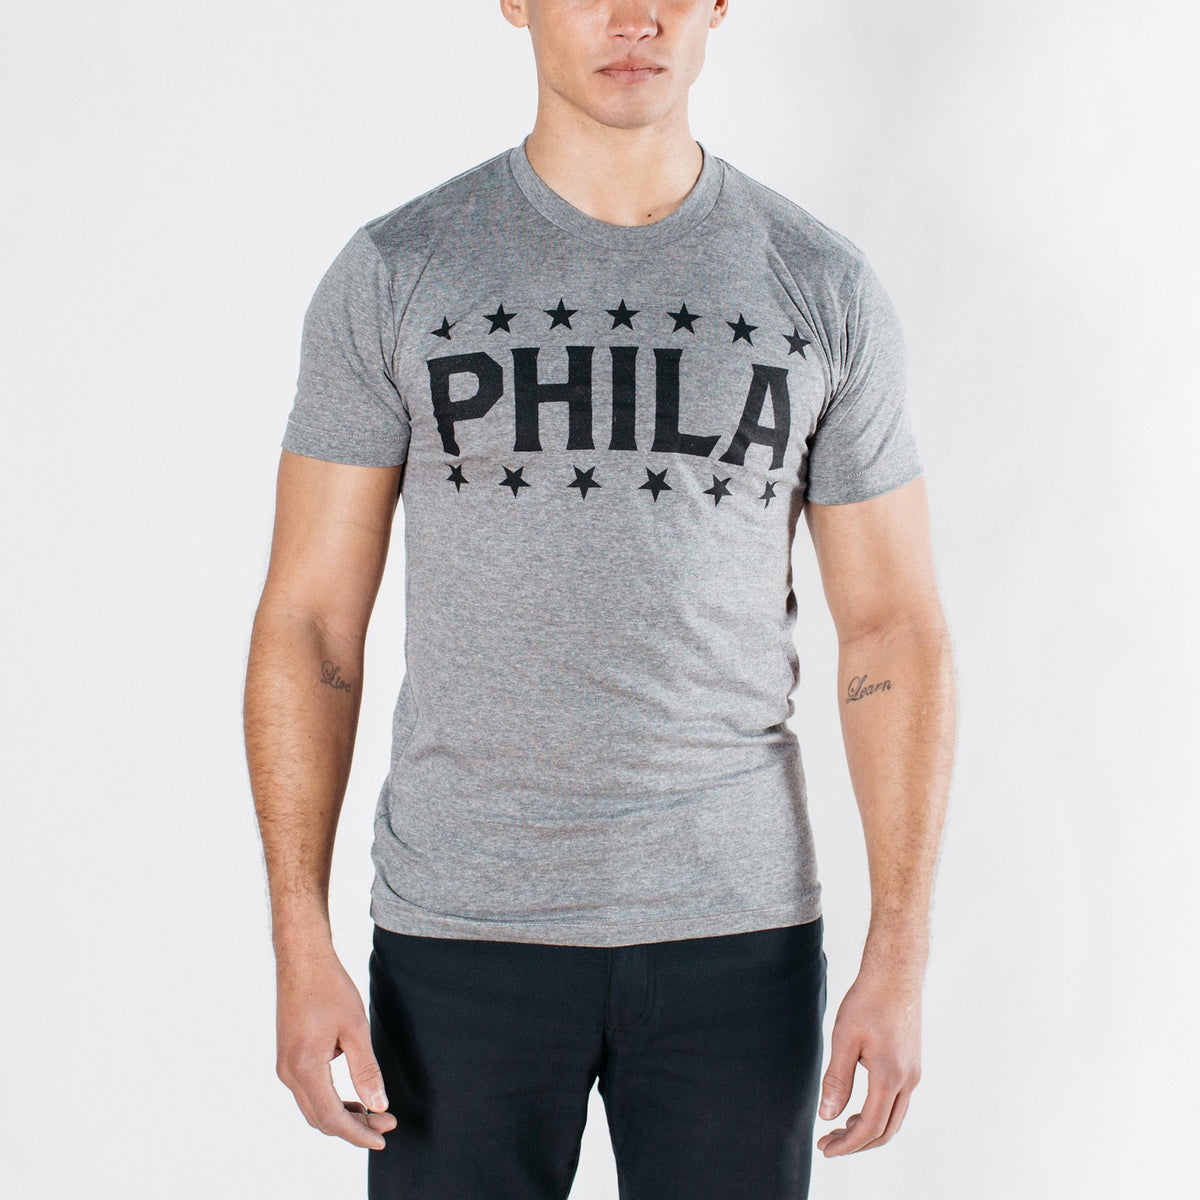 GYM // Phila T-Shirt Shirts Commonwealth Proper